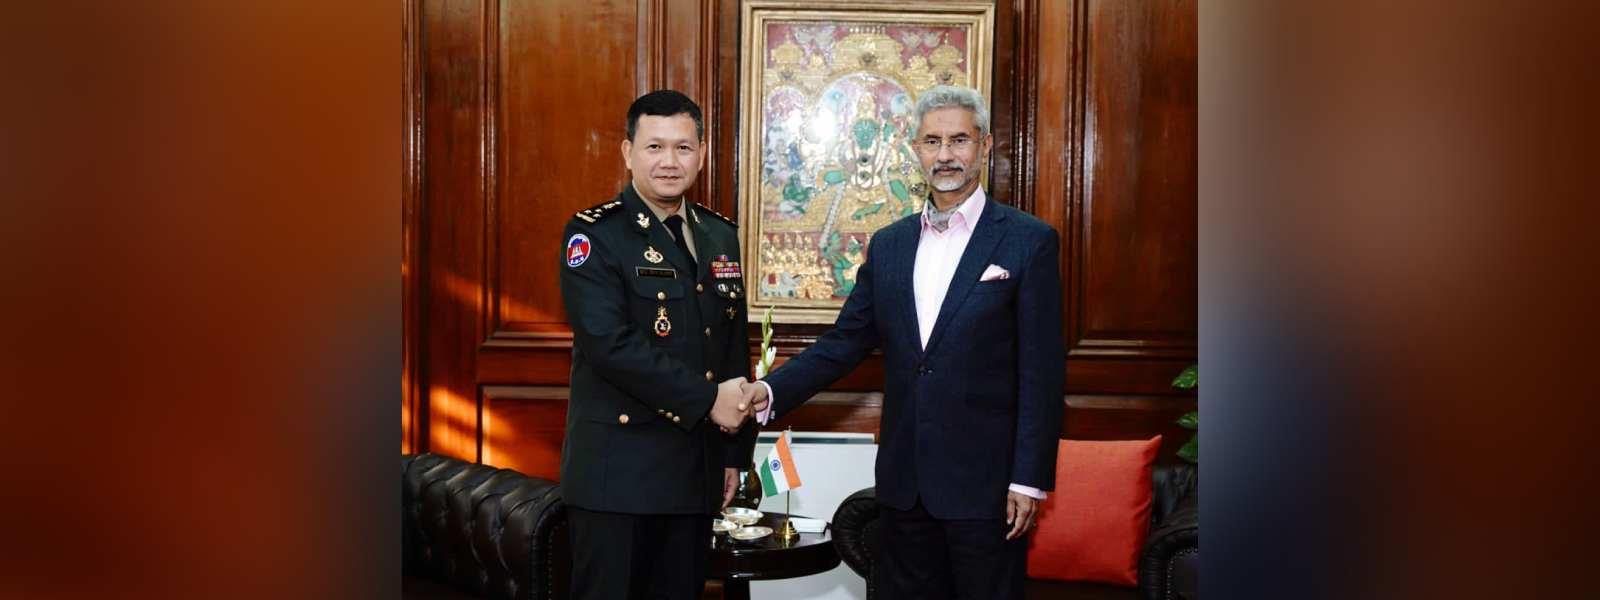 External Affairs Minister Dr. S. Jaishankar met H. E. Lieutenant General Hun Manet, Commander of the Royal Cambodian Army in New Delhi